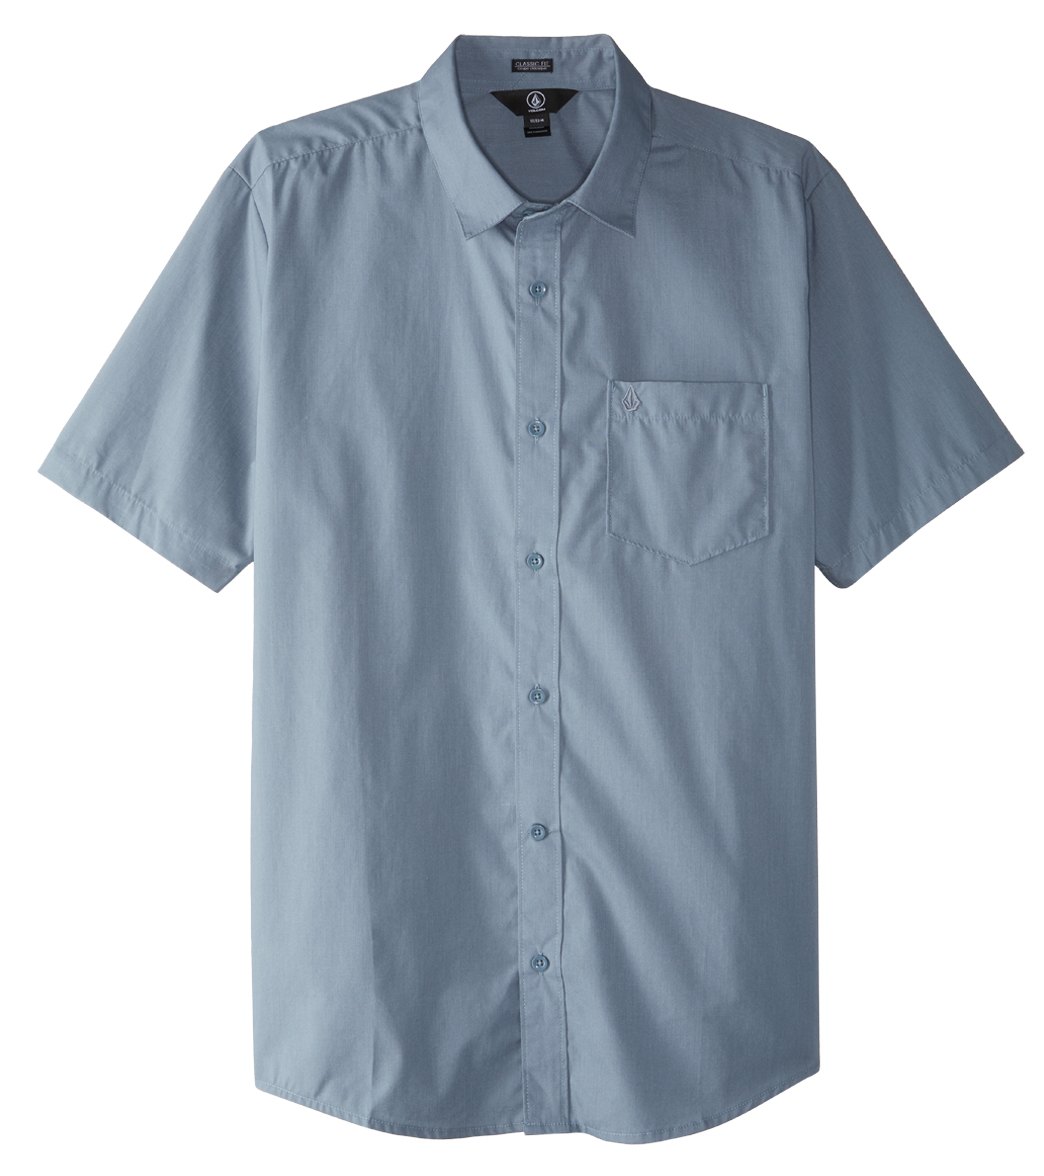 Volcom Men's Everett Solid Short Sleeve Shirt - Ash Blue Small Cotton/Polyester - Swimoutlet.com